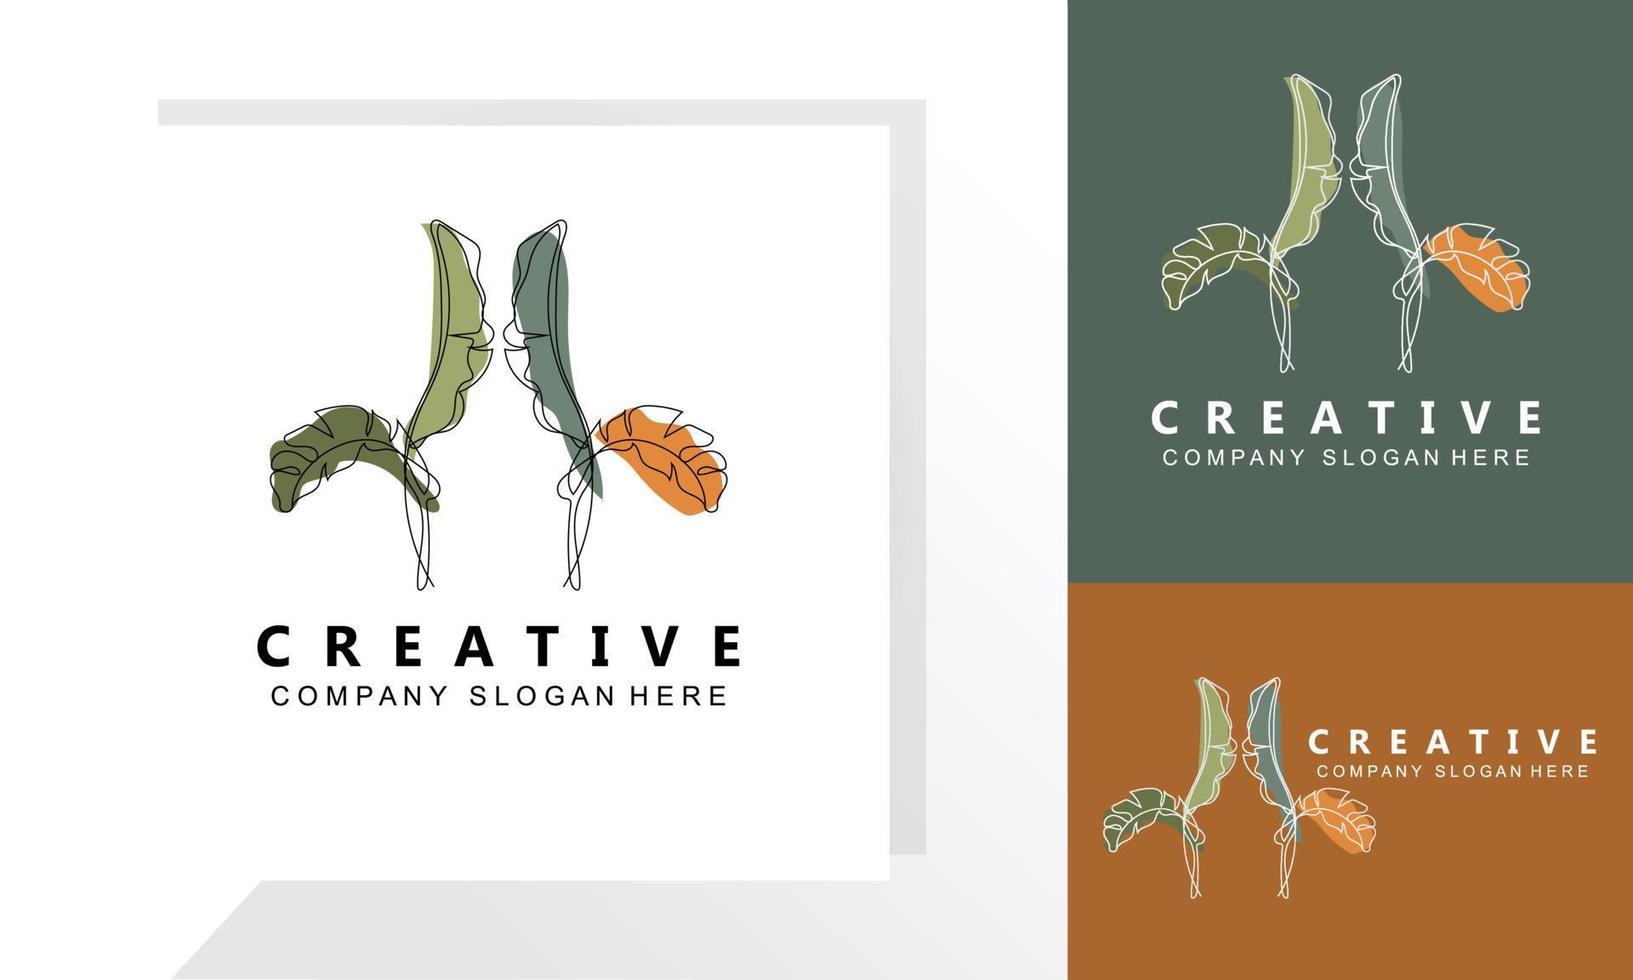 Leaf Logo Design, Vector With Other Styles, Illustration Set Collection Of Leaf Types